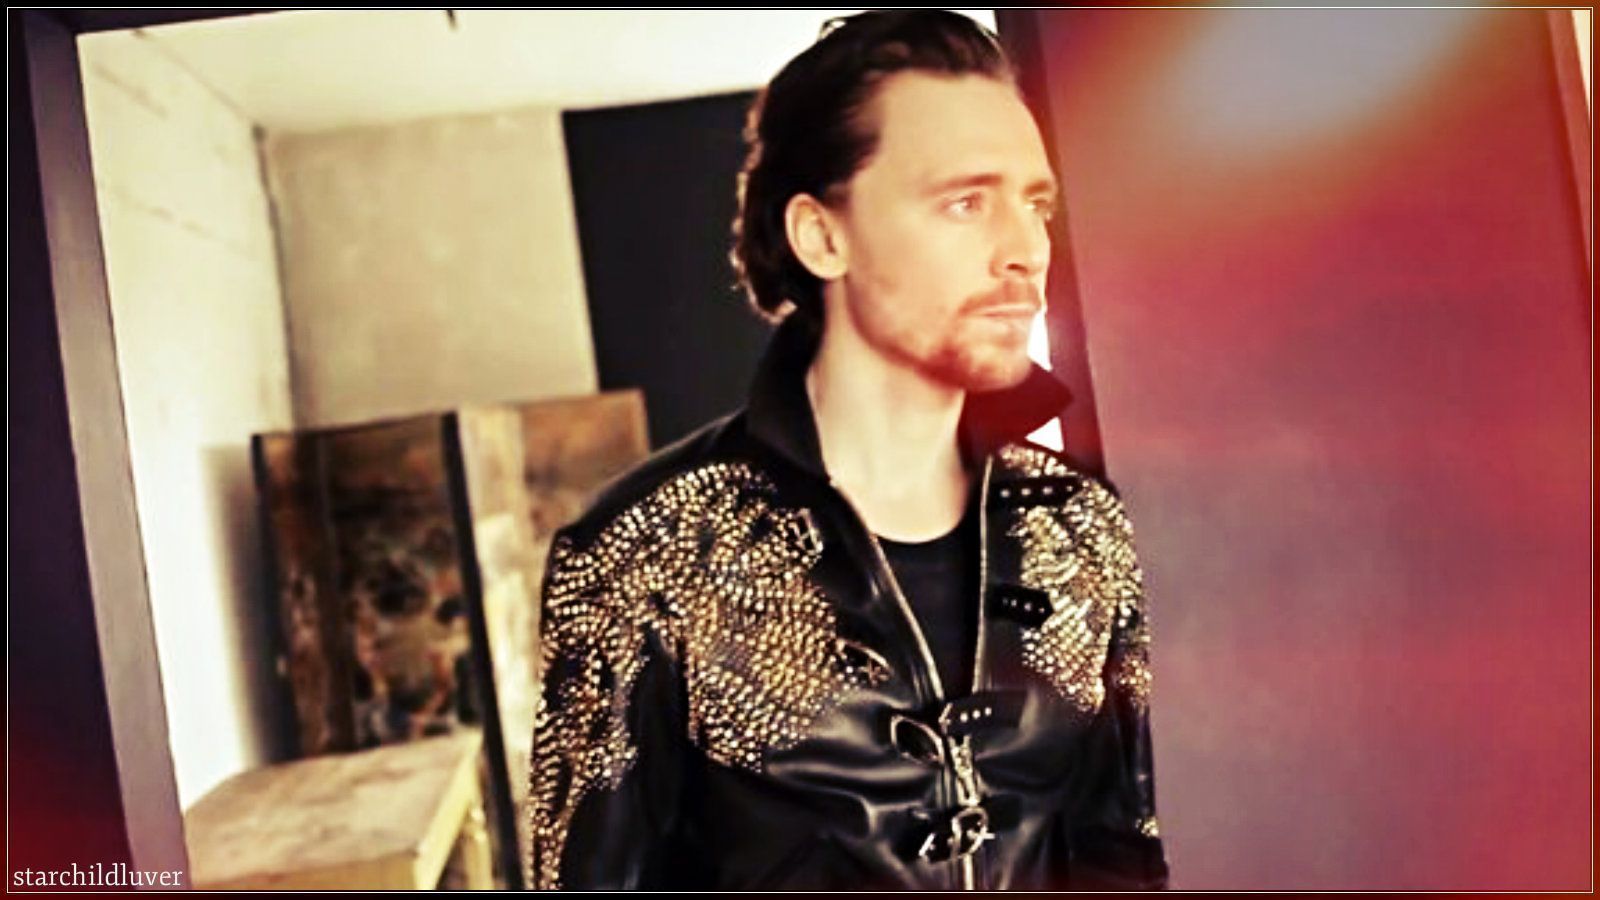 Tom Hiddleston - Tom Hiddleston Wallpaper (36642267) - Fanpop